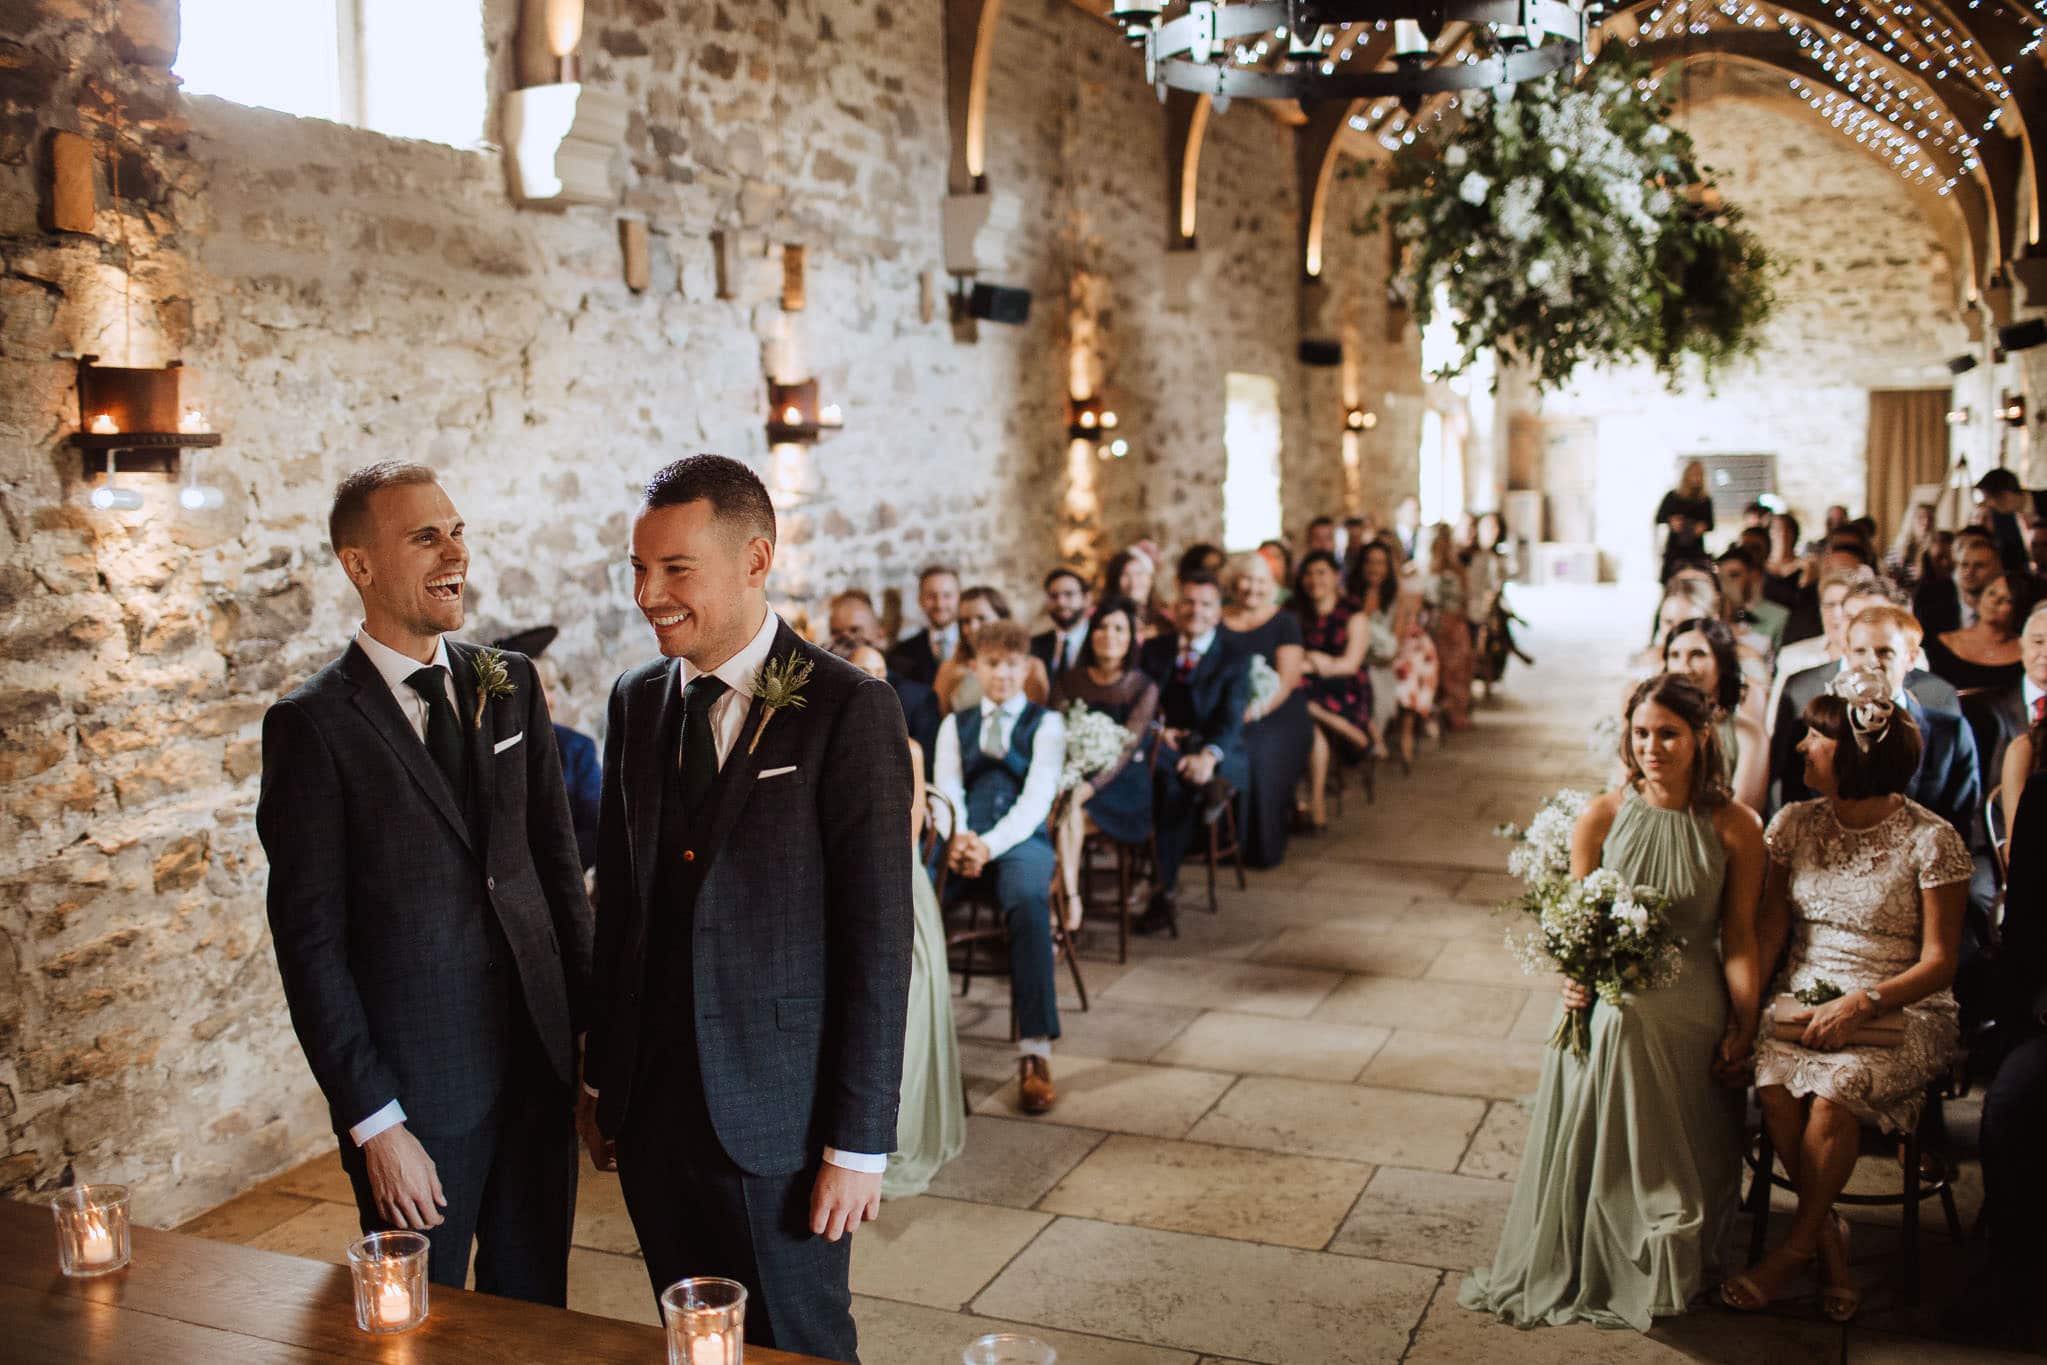 Healey Barn wedding photographers